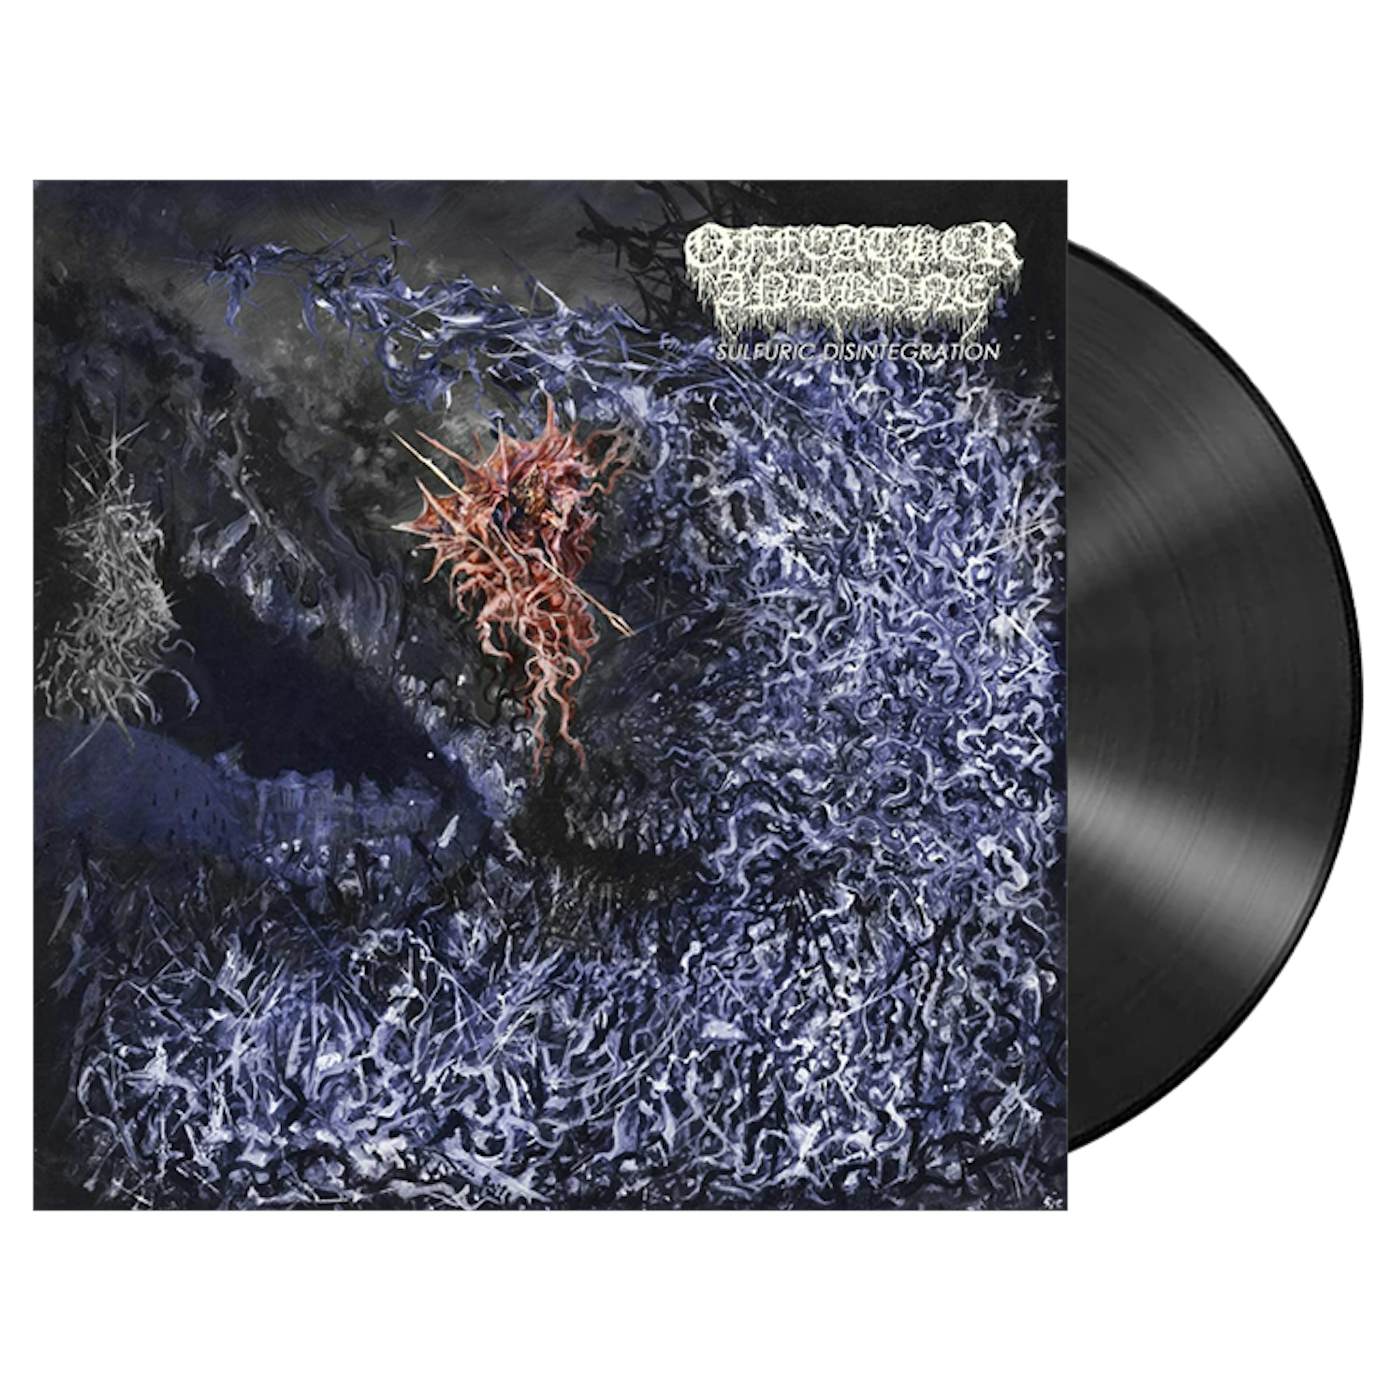 OF FEATHER AND BONE - 'Sulfuric Disintegration' LP (Vinyl)